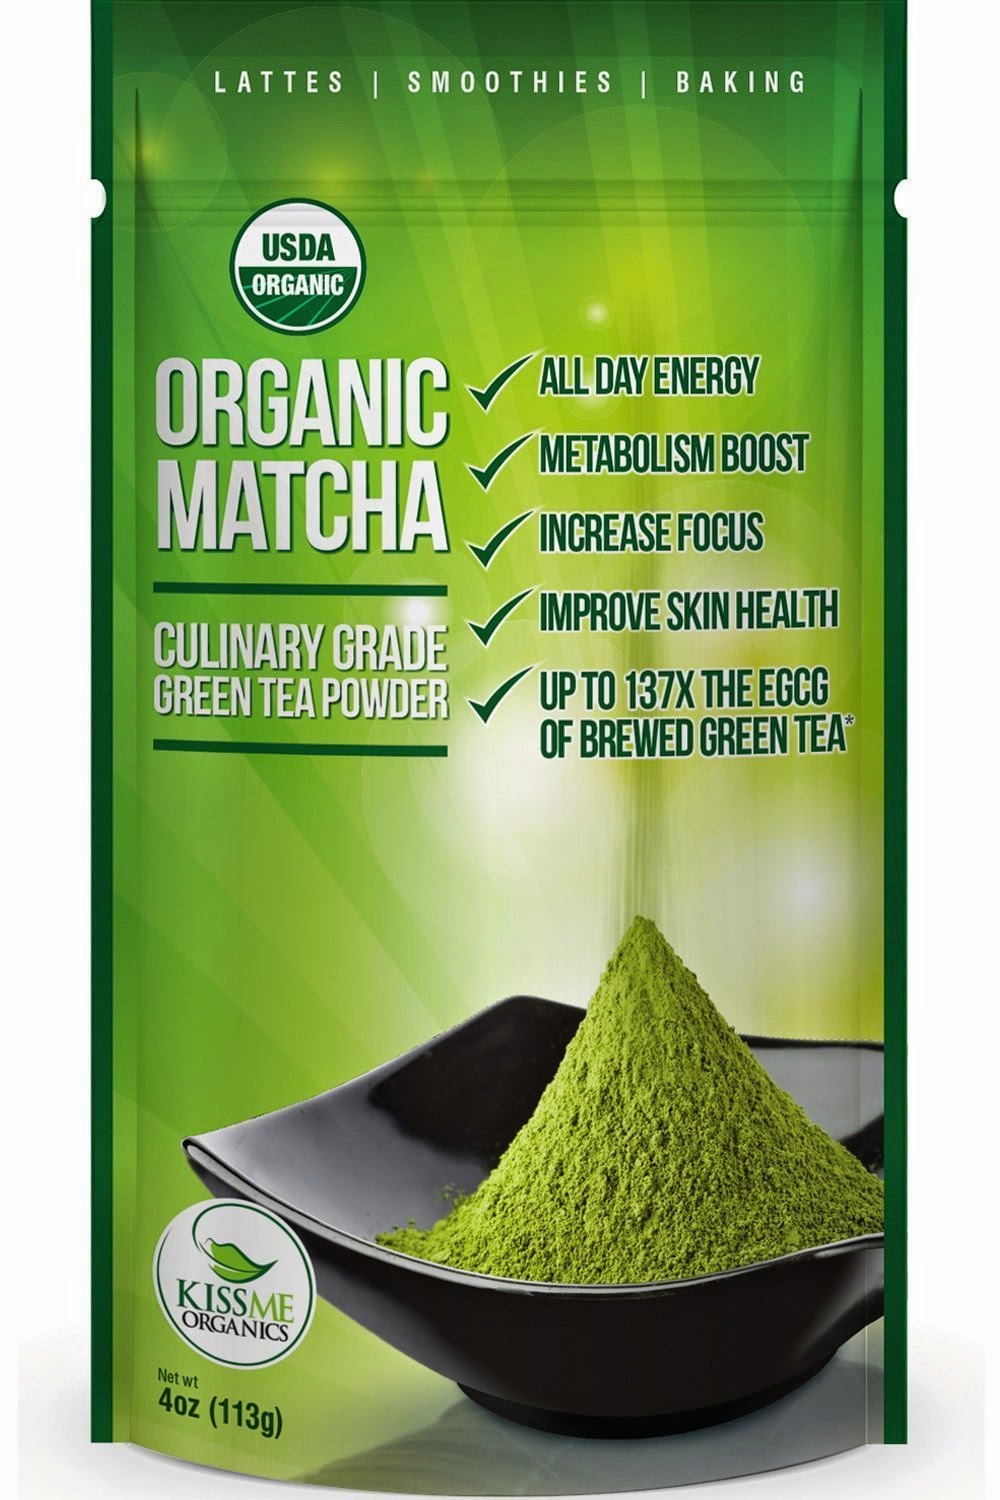 http://www.amazon.co.uk/Matcha-Green-Tea-Powder-Antioxidant/dp/B00DDT116M